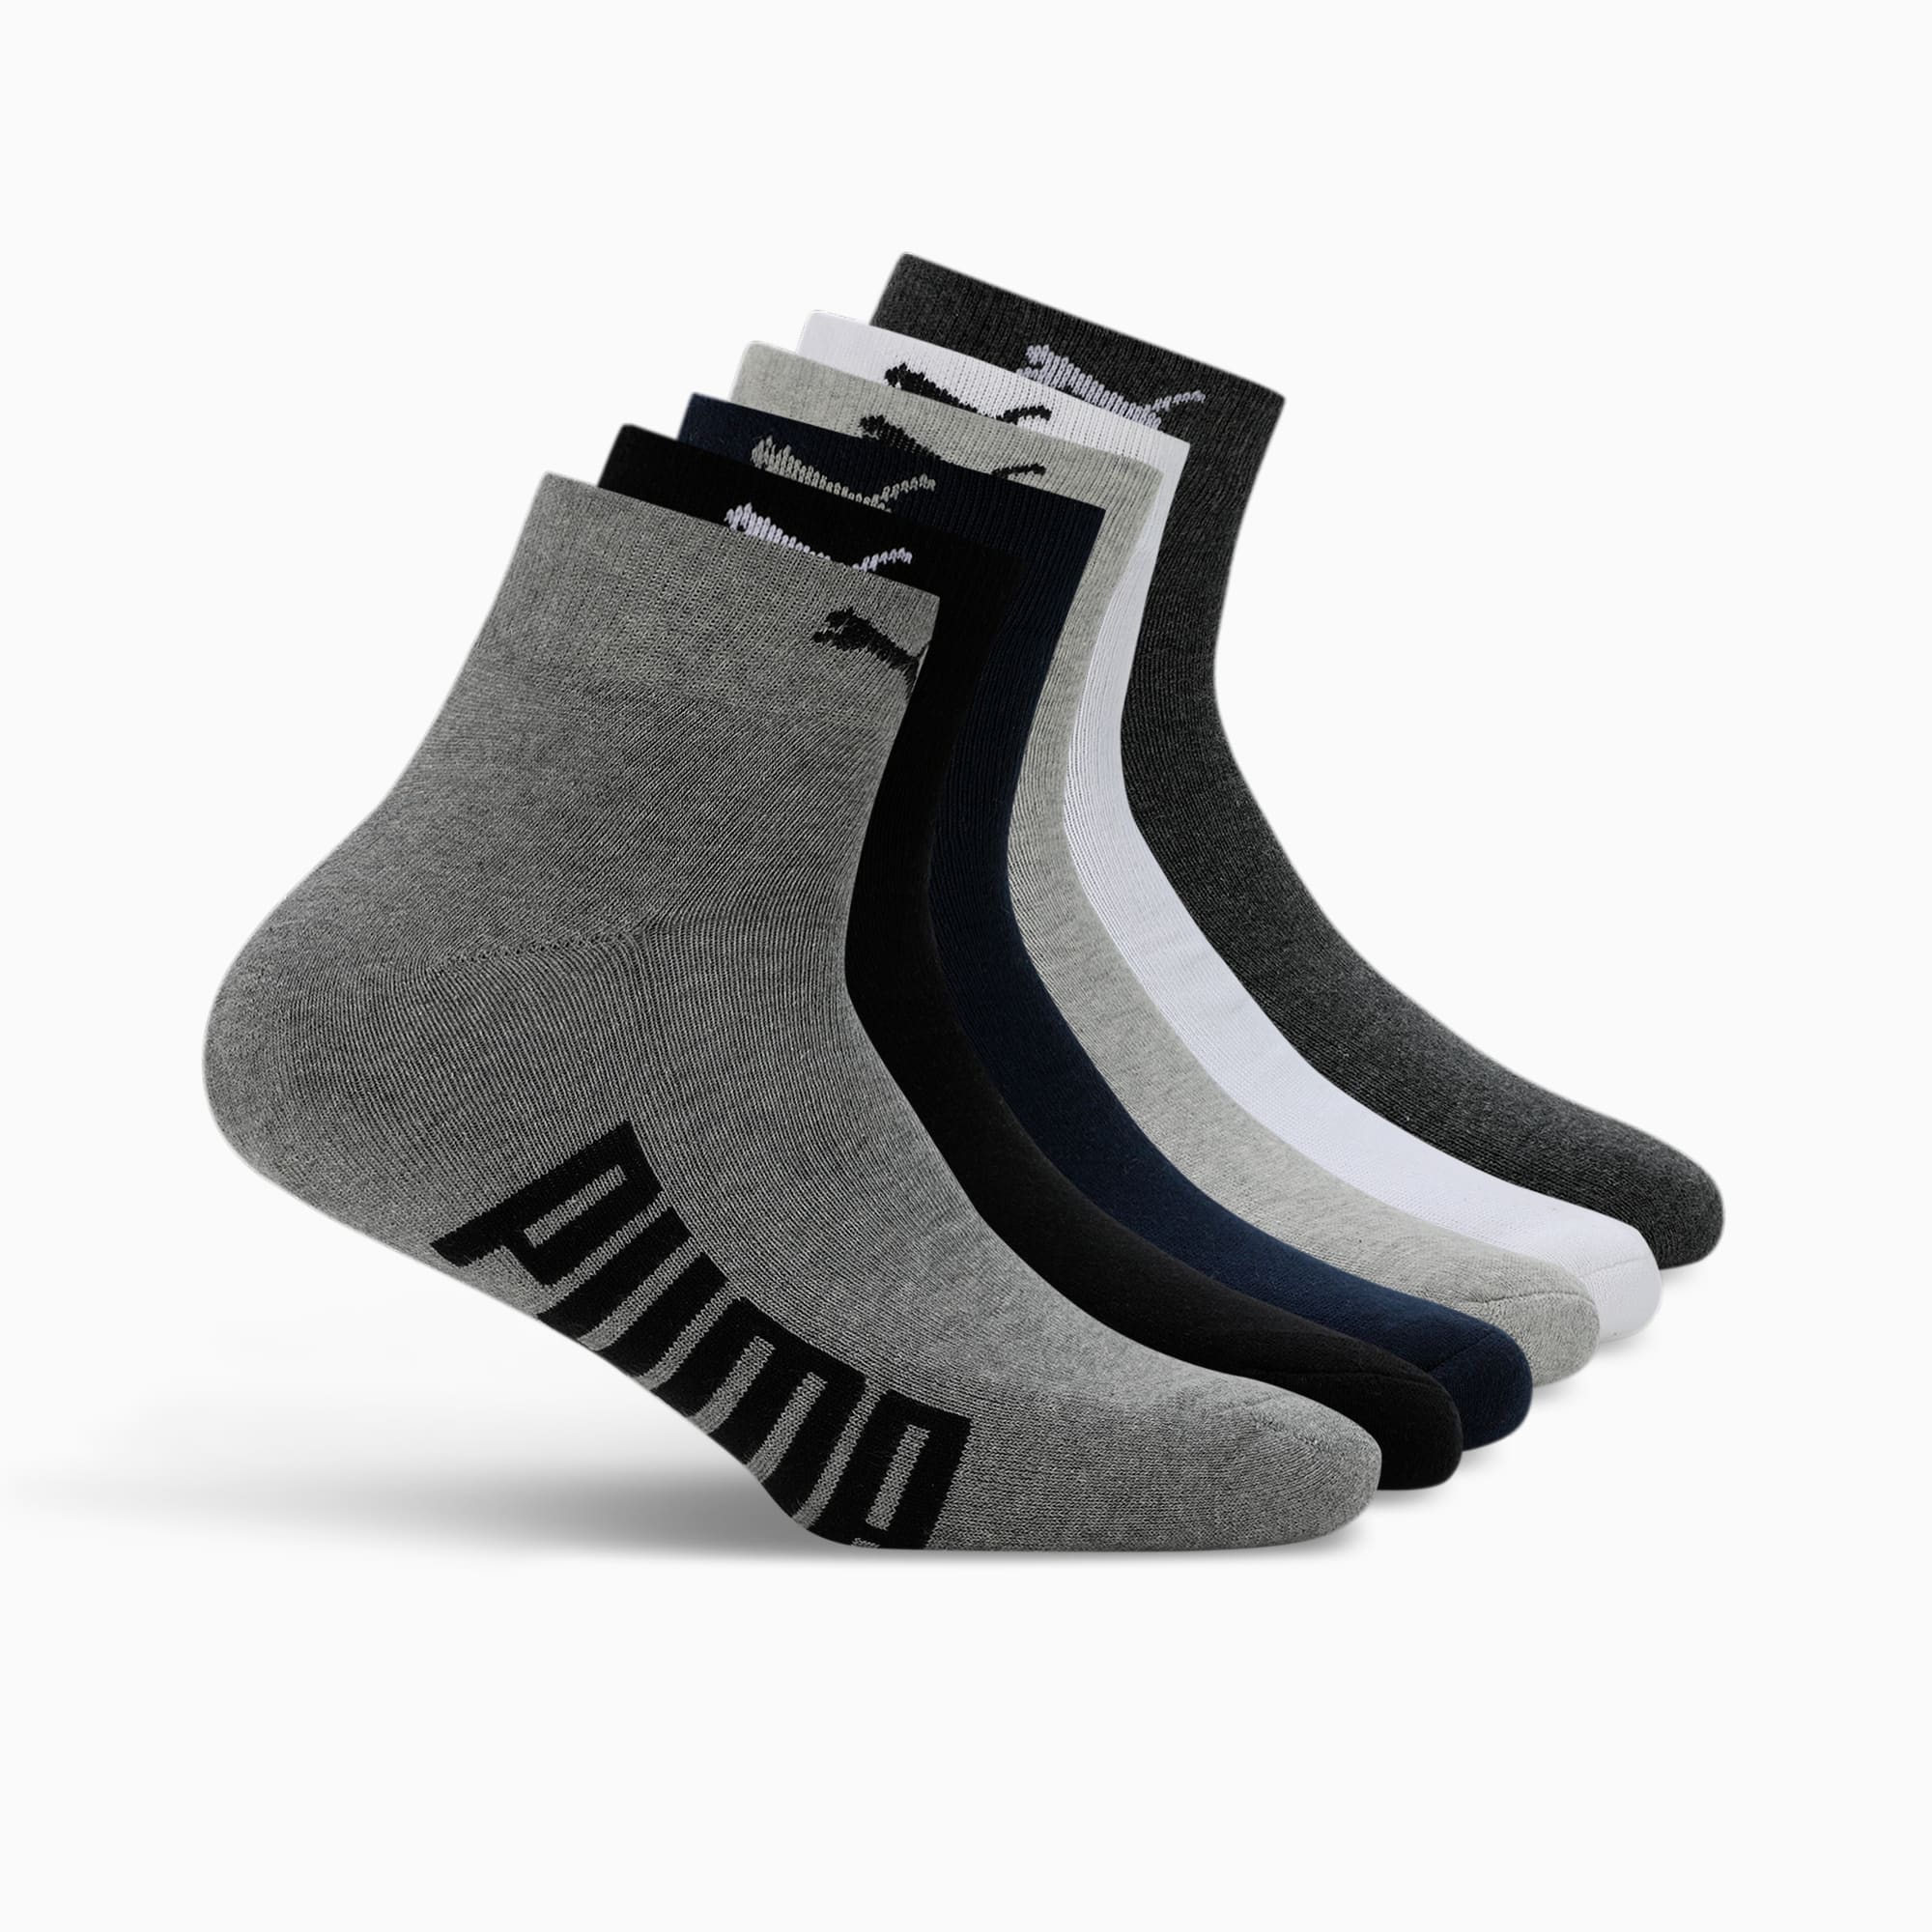 PUMA Half Terry Unisex Ankle Length Socks Pack of 6